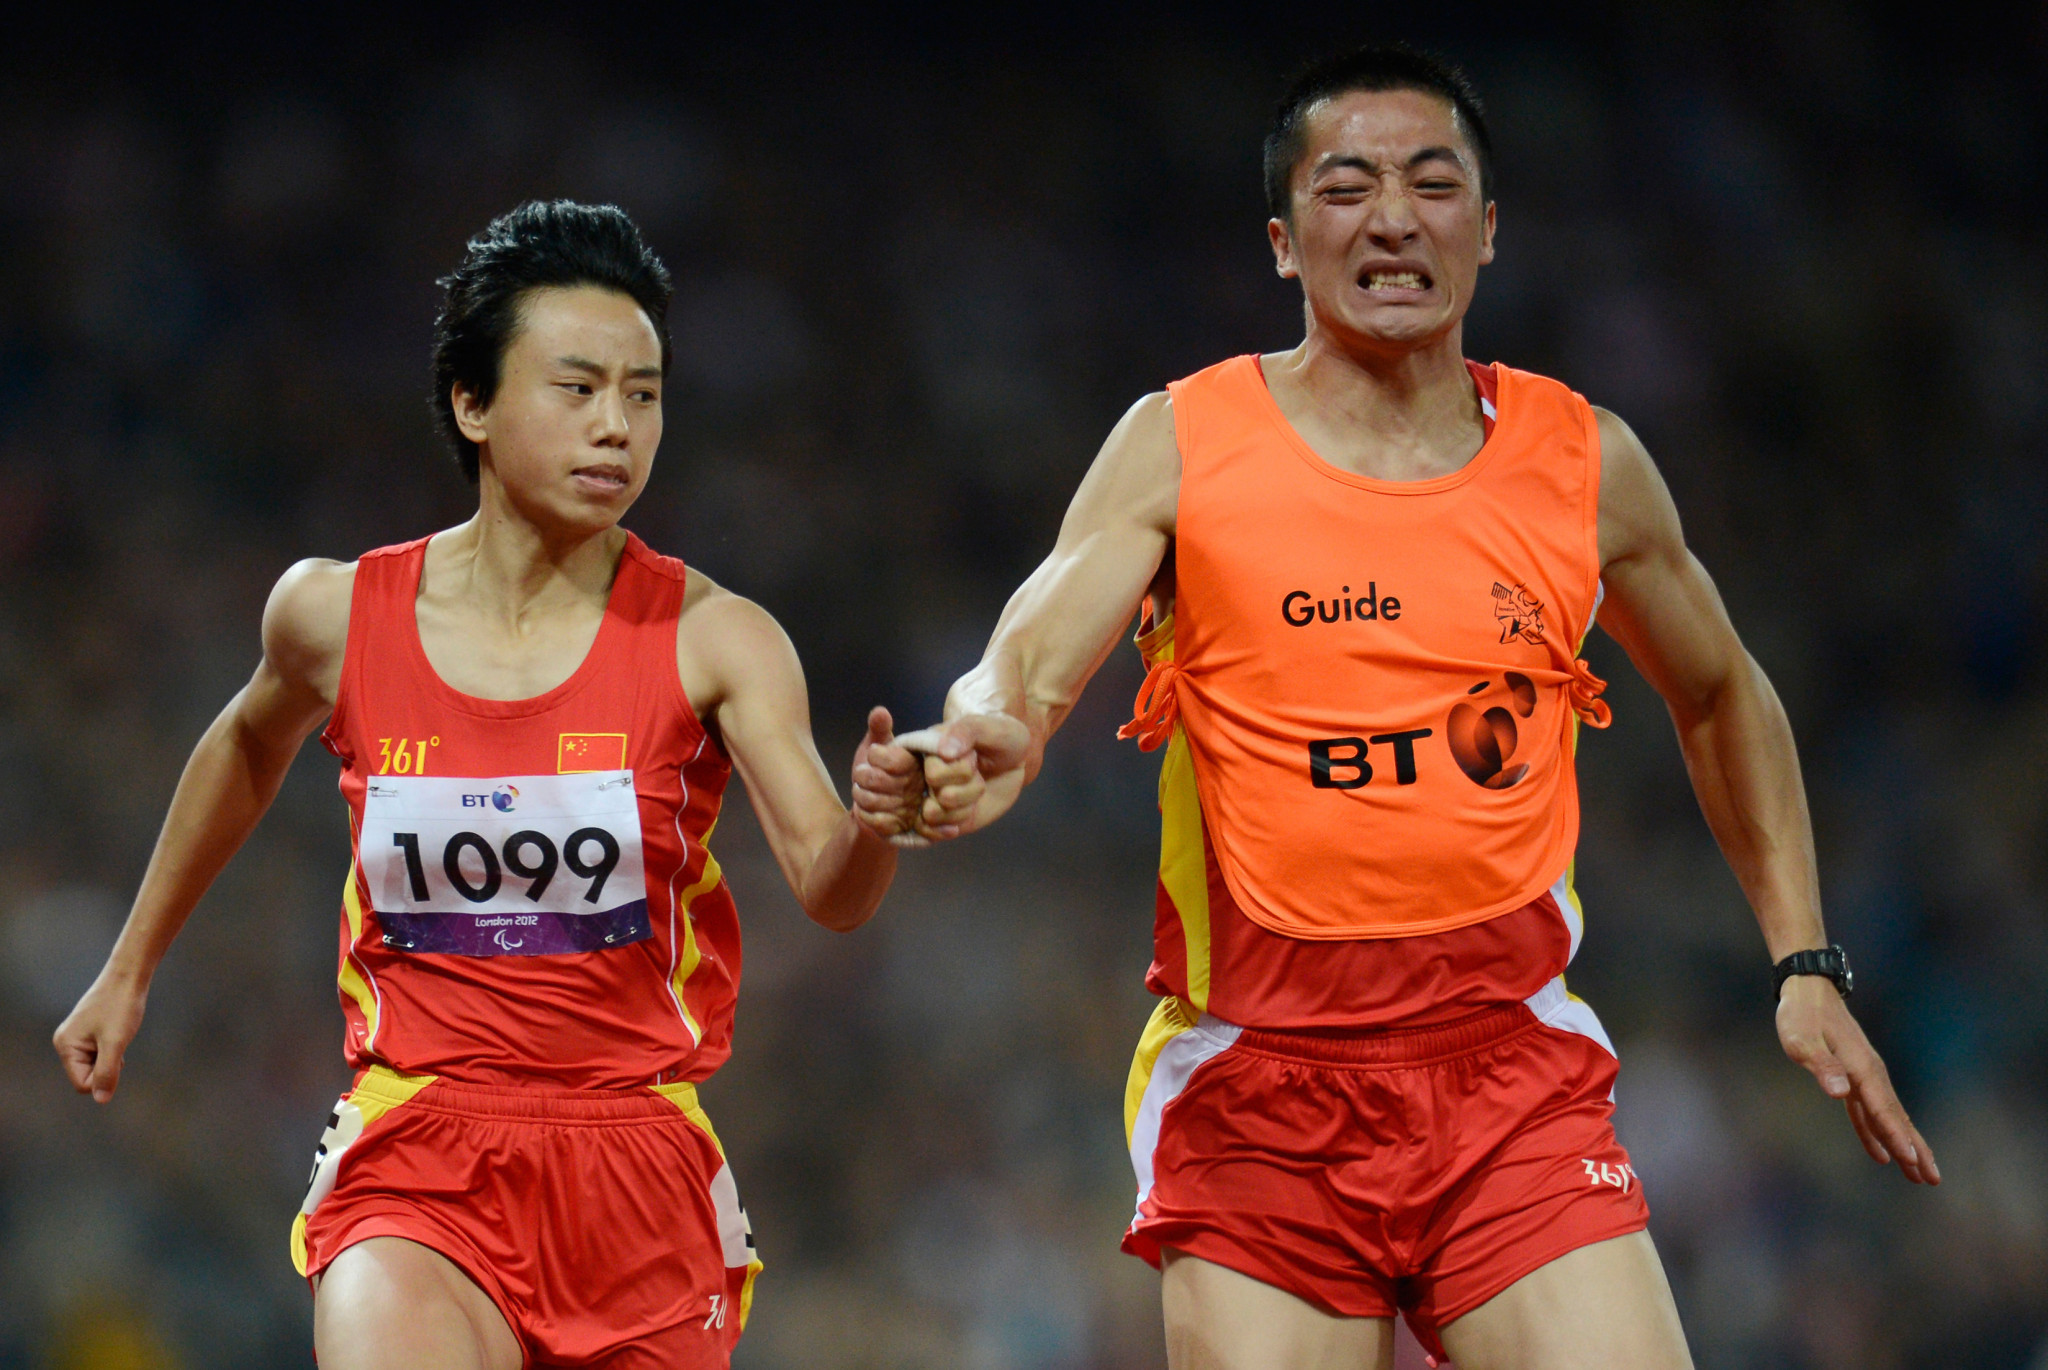 Sprinter Zhou records world leading long jump attempt at home World Para Athletics Grand Prix